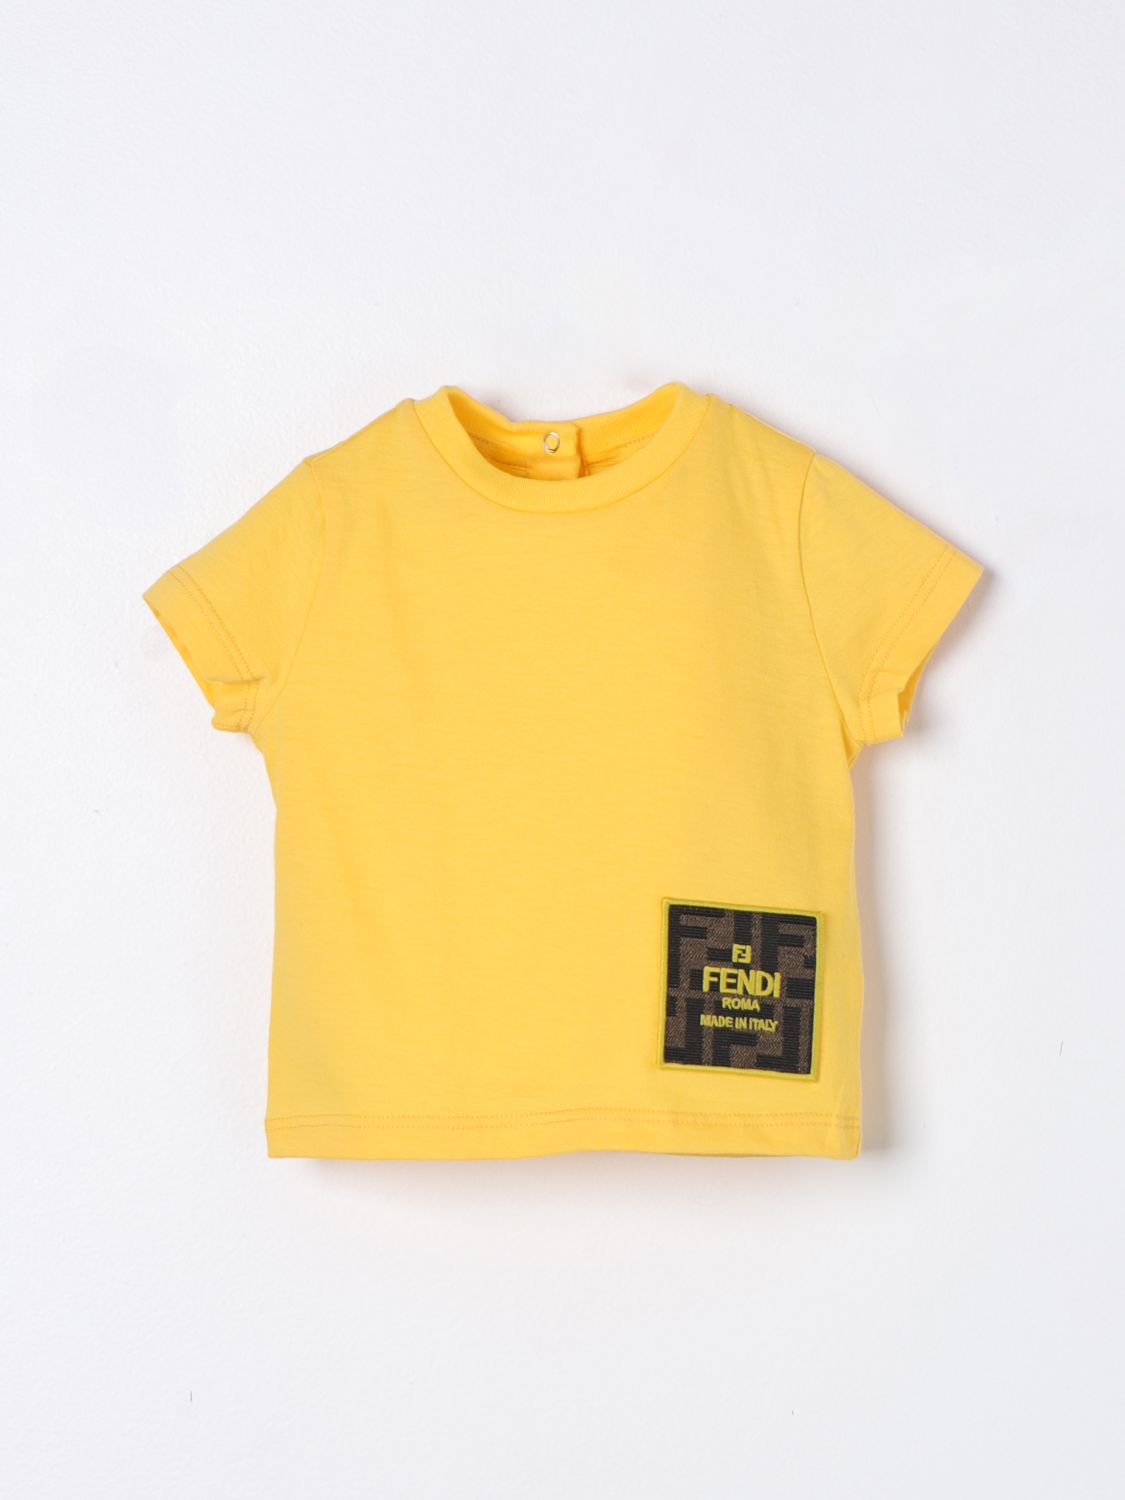 Fendi Babies' T-shirt  Kids Kids Color Yellow